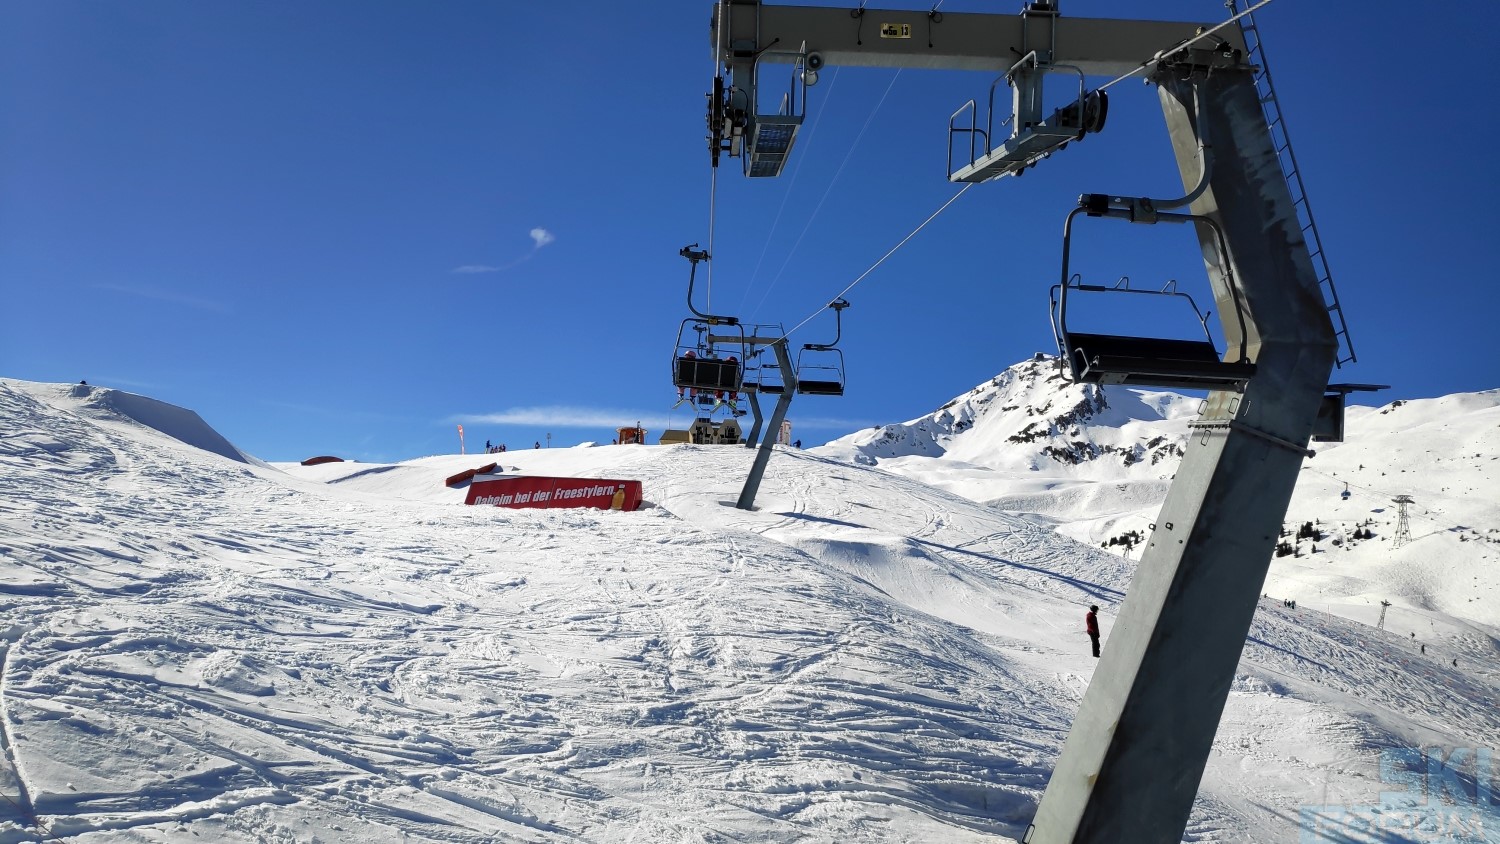 290976-sciare-ad-arosa-skiing-138.jpg